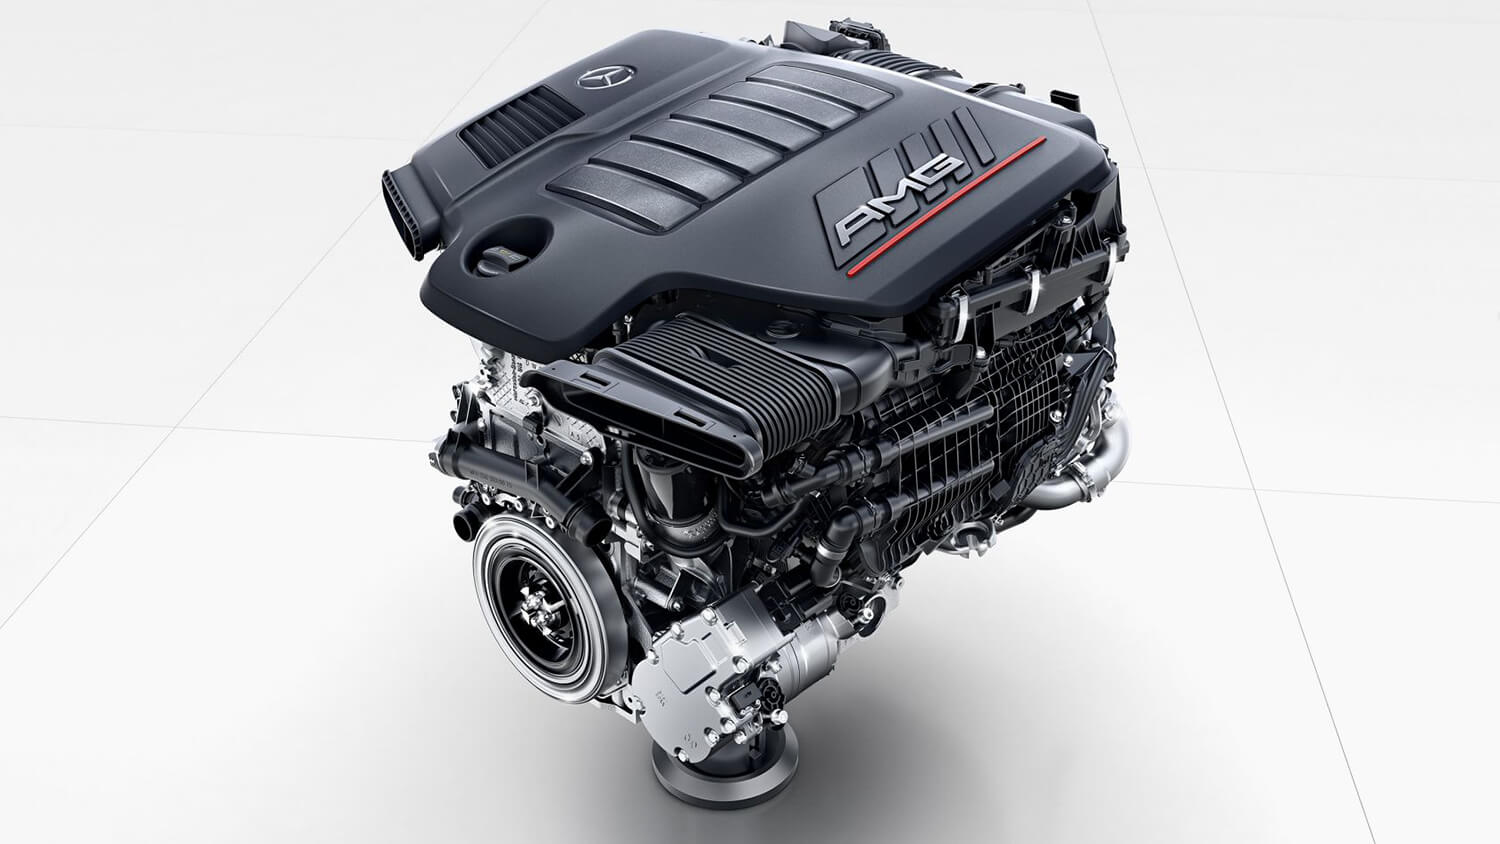 3.0-litre 6-cylinder in-line turbocharged engine